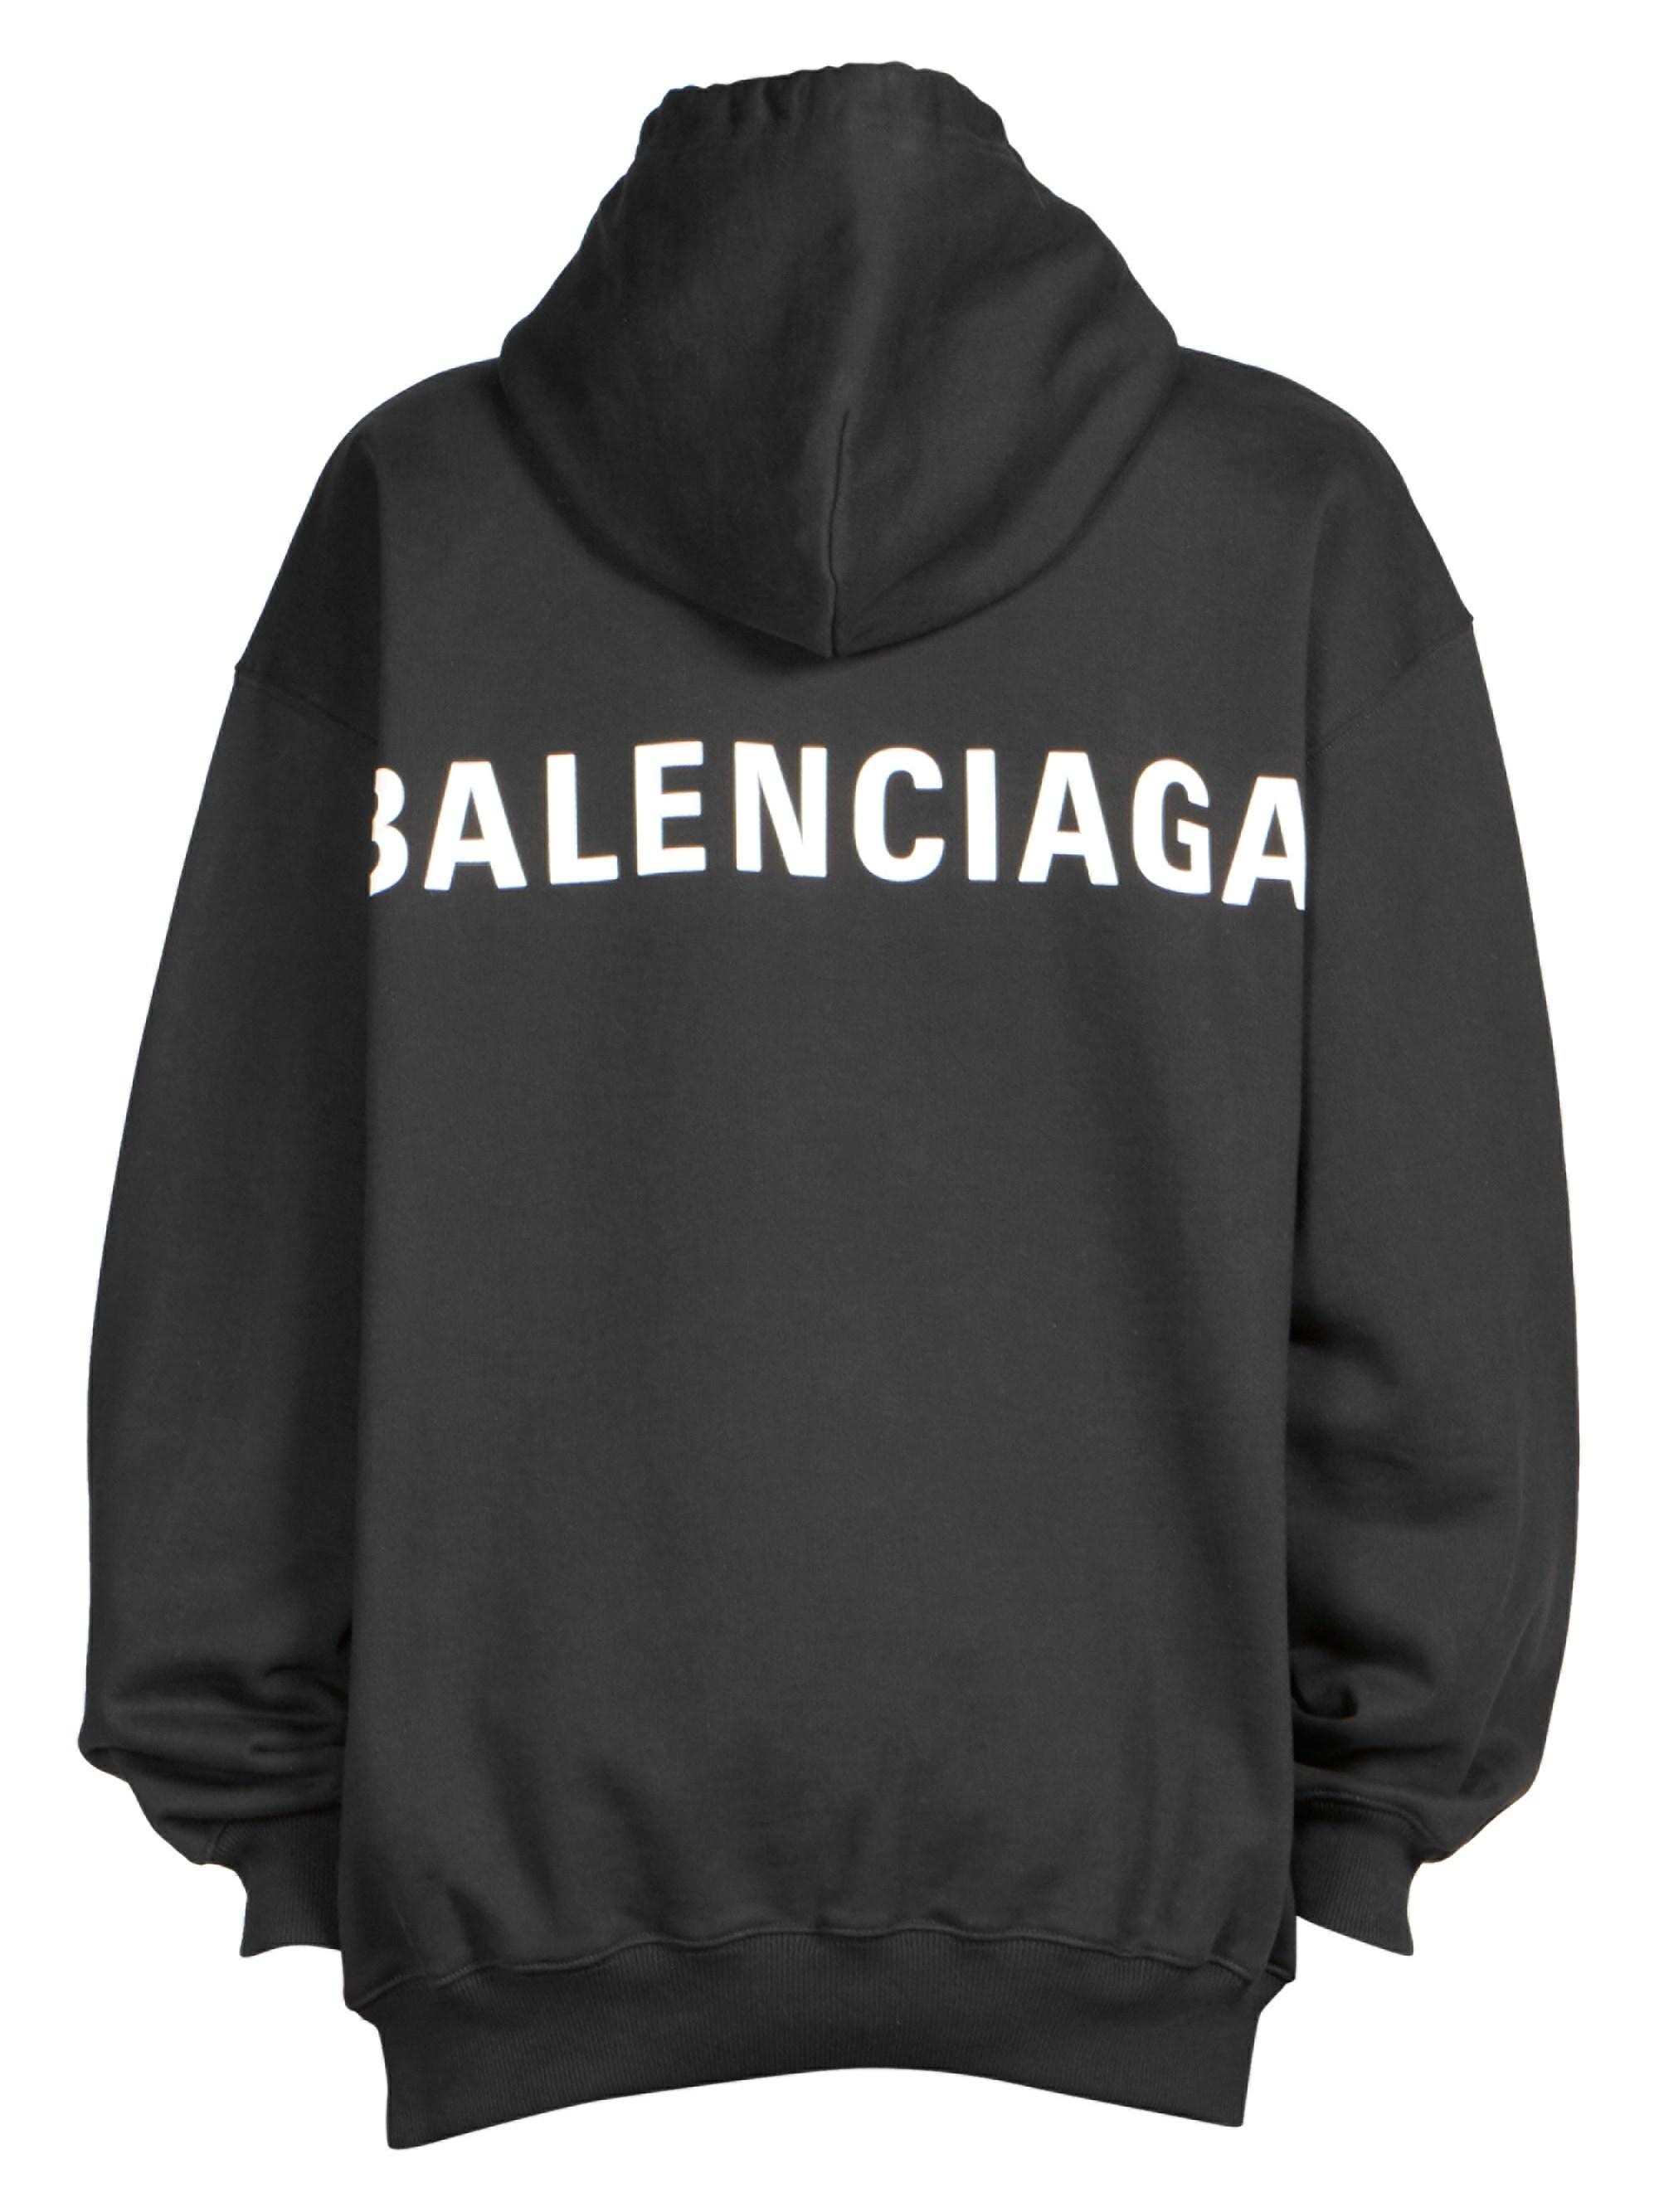 Balenciaga Oversized Logo Hoodie Online, SAVE 55% - raptorunderlayment.com